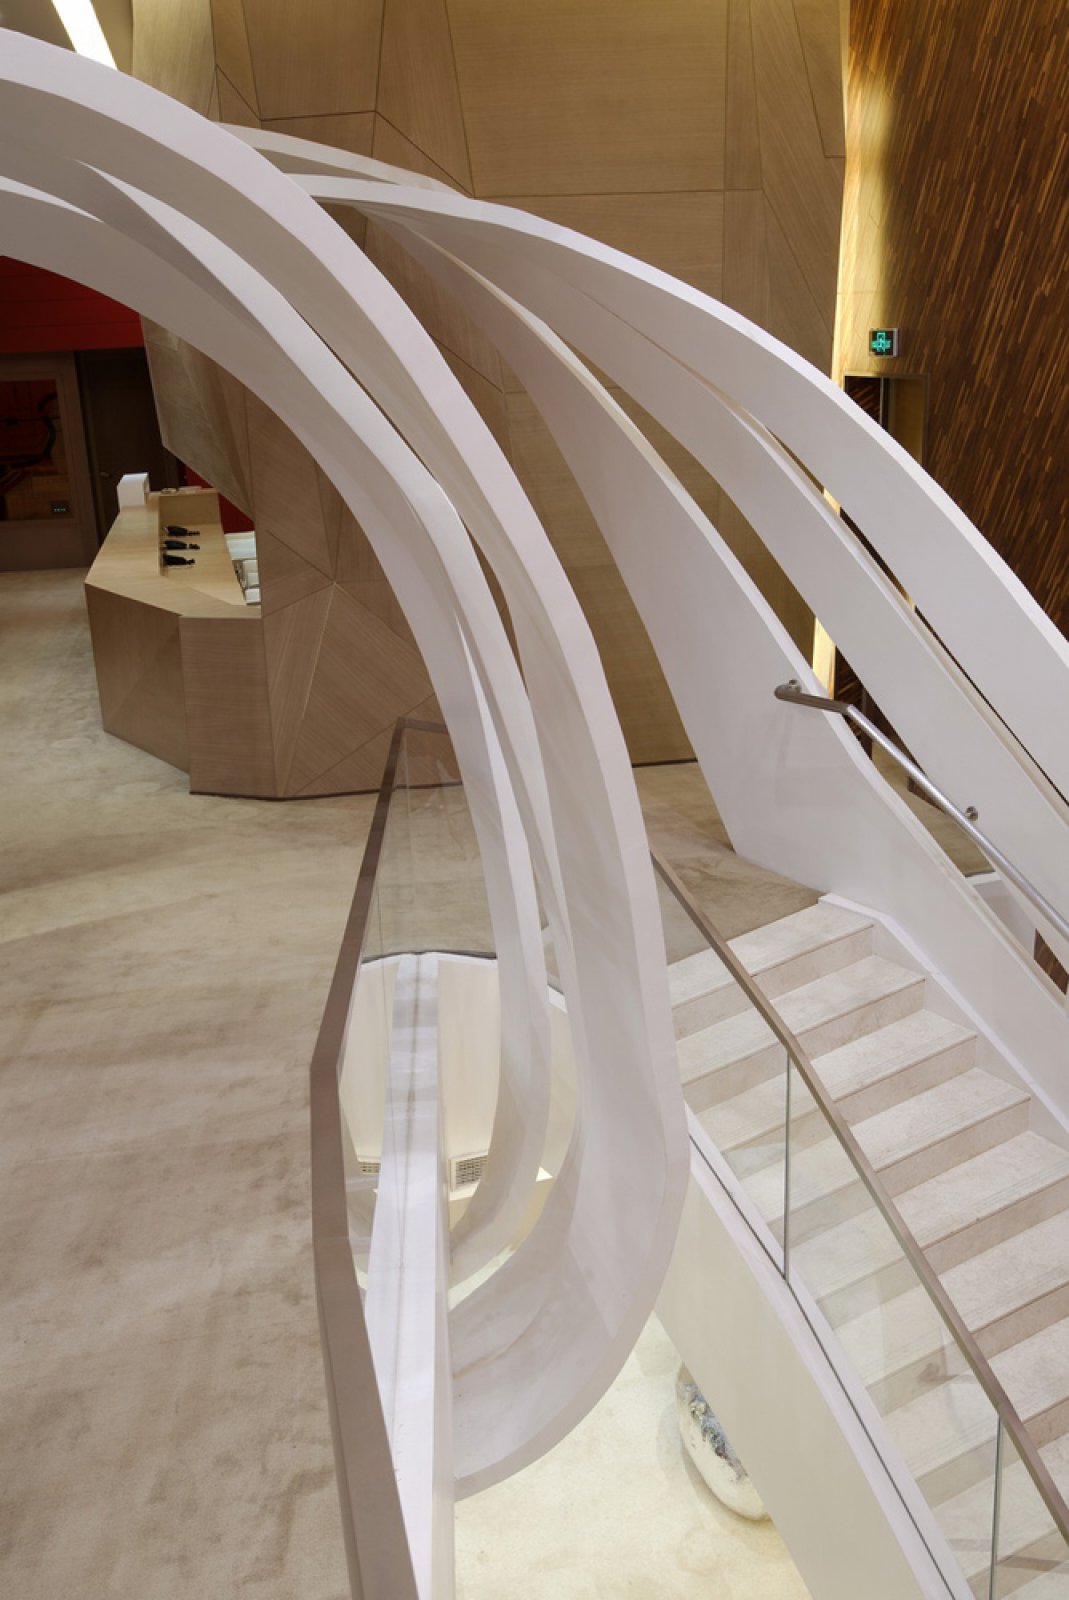 SCARF IN THE WINDOW——零售空间设计|KLID达观国际